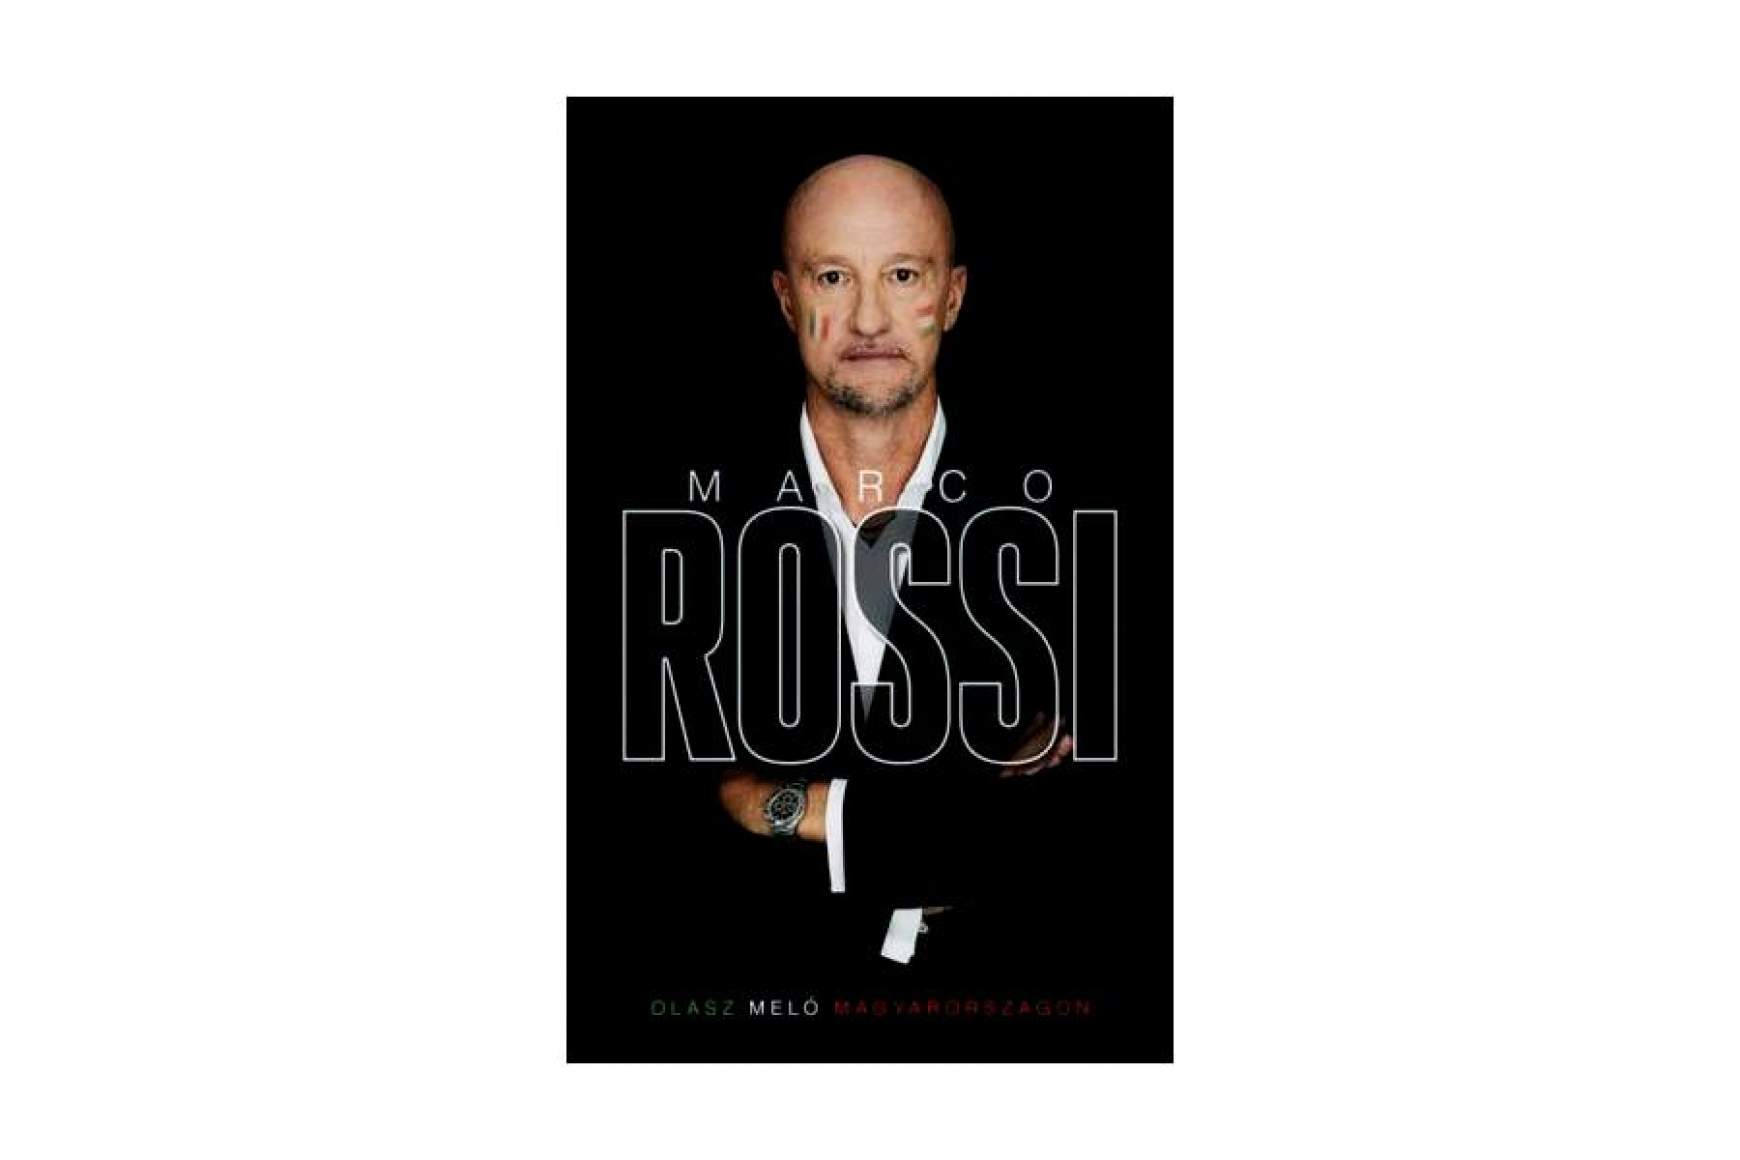 Marco Rossi könyv